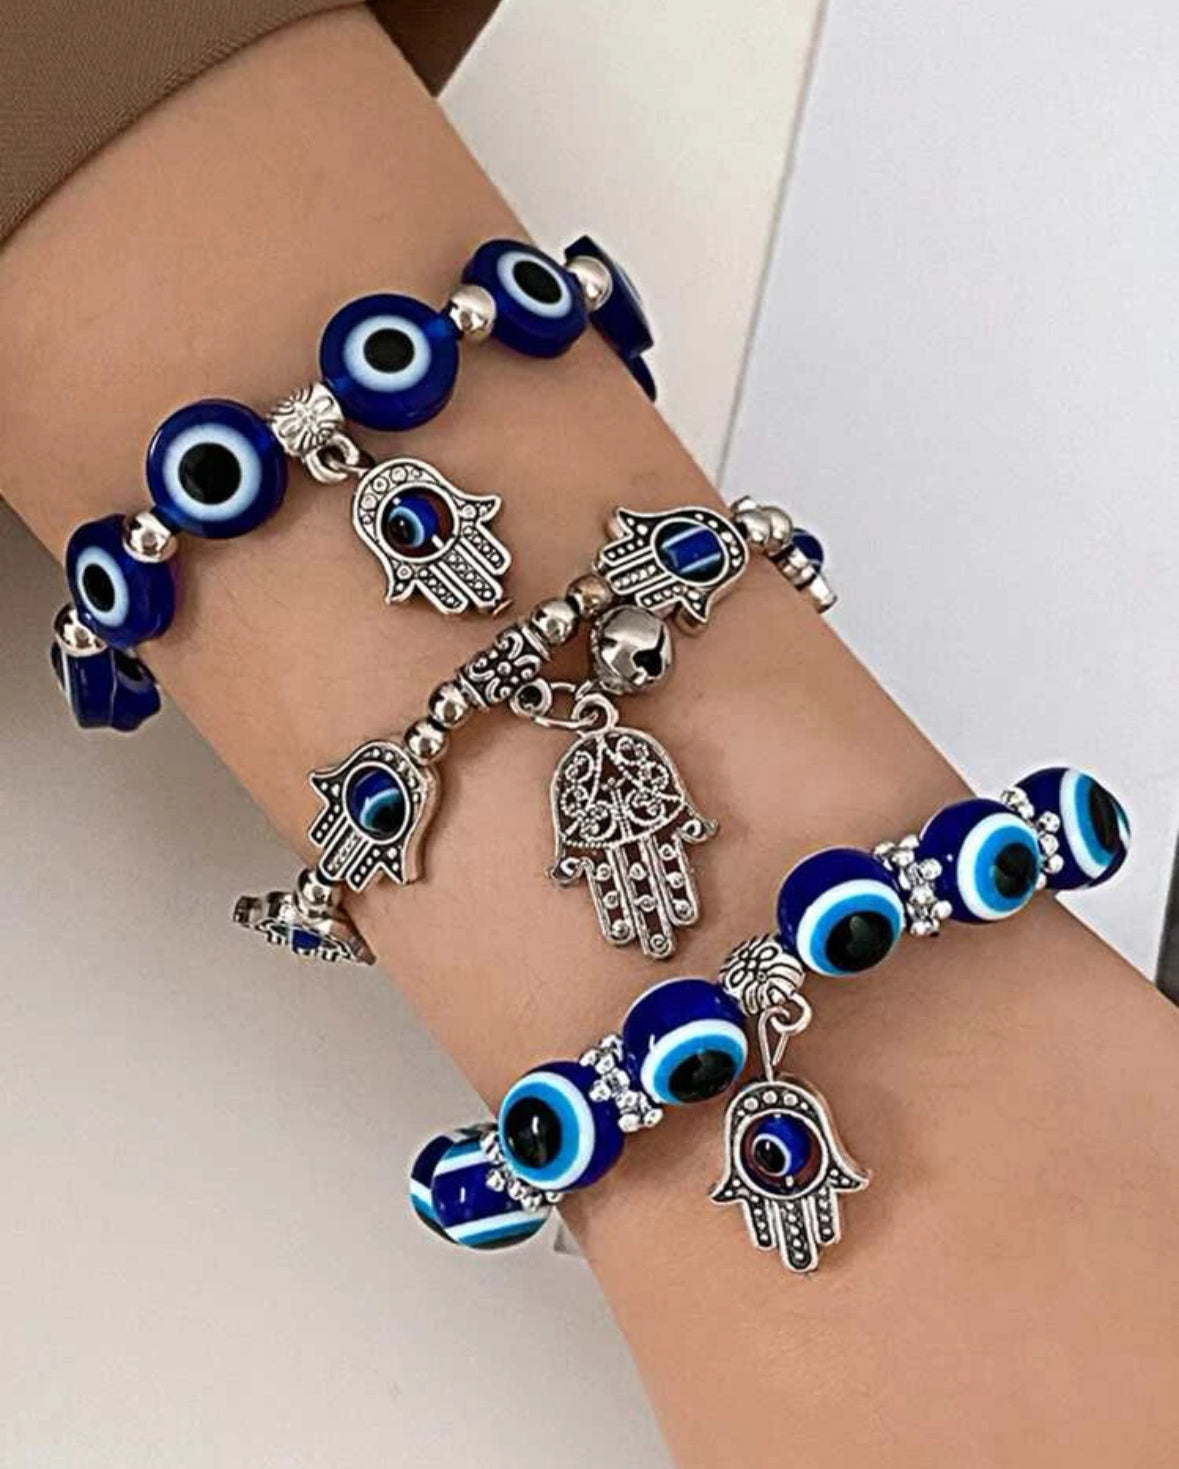 Beautiful evil eye 🧿 bracelet